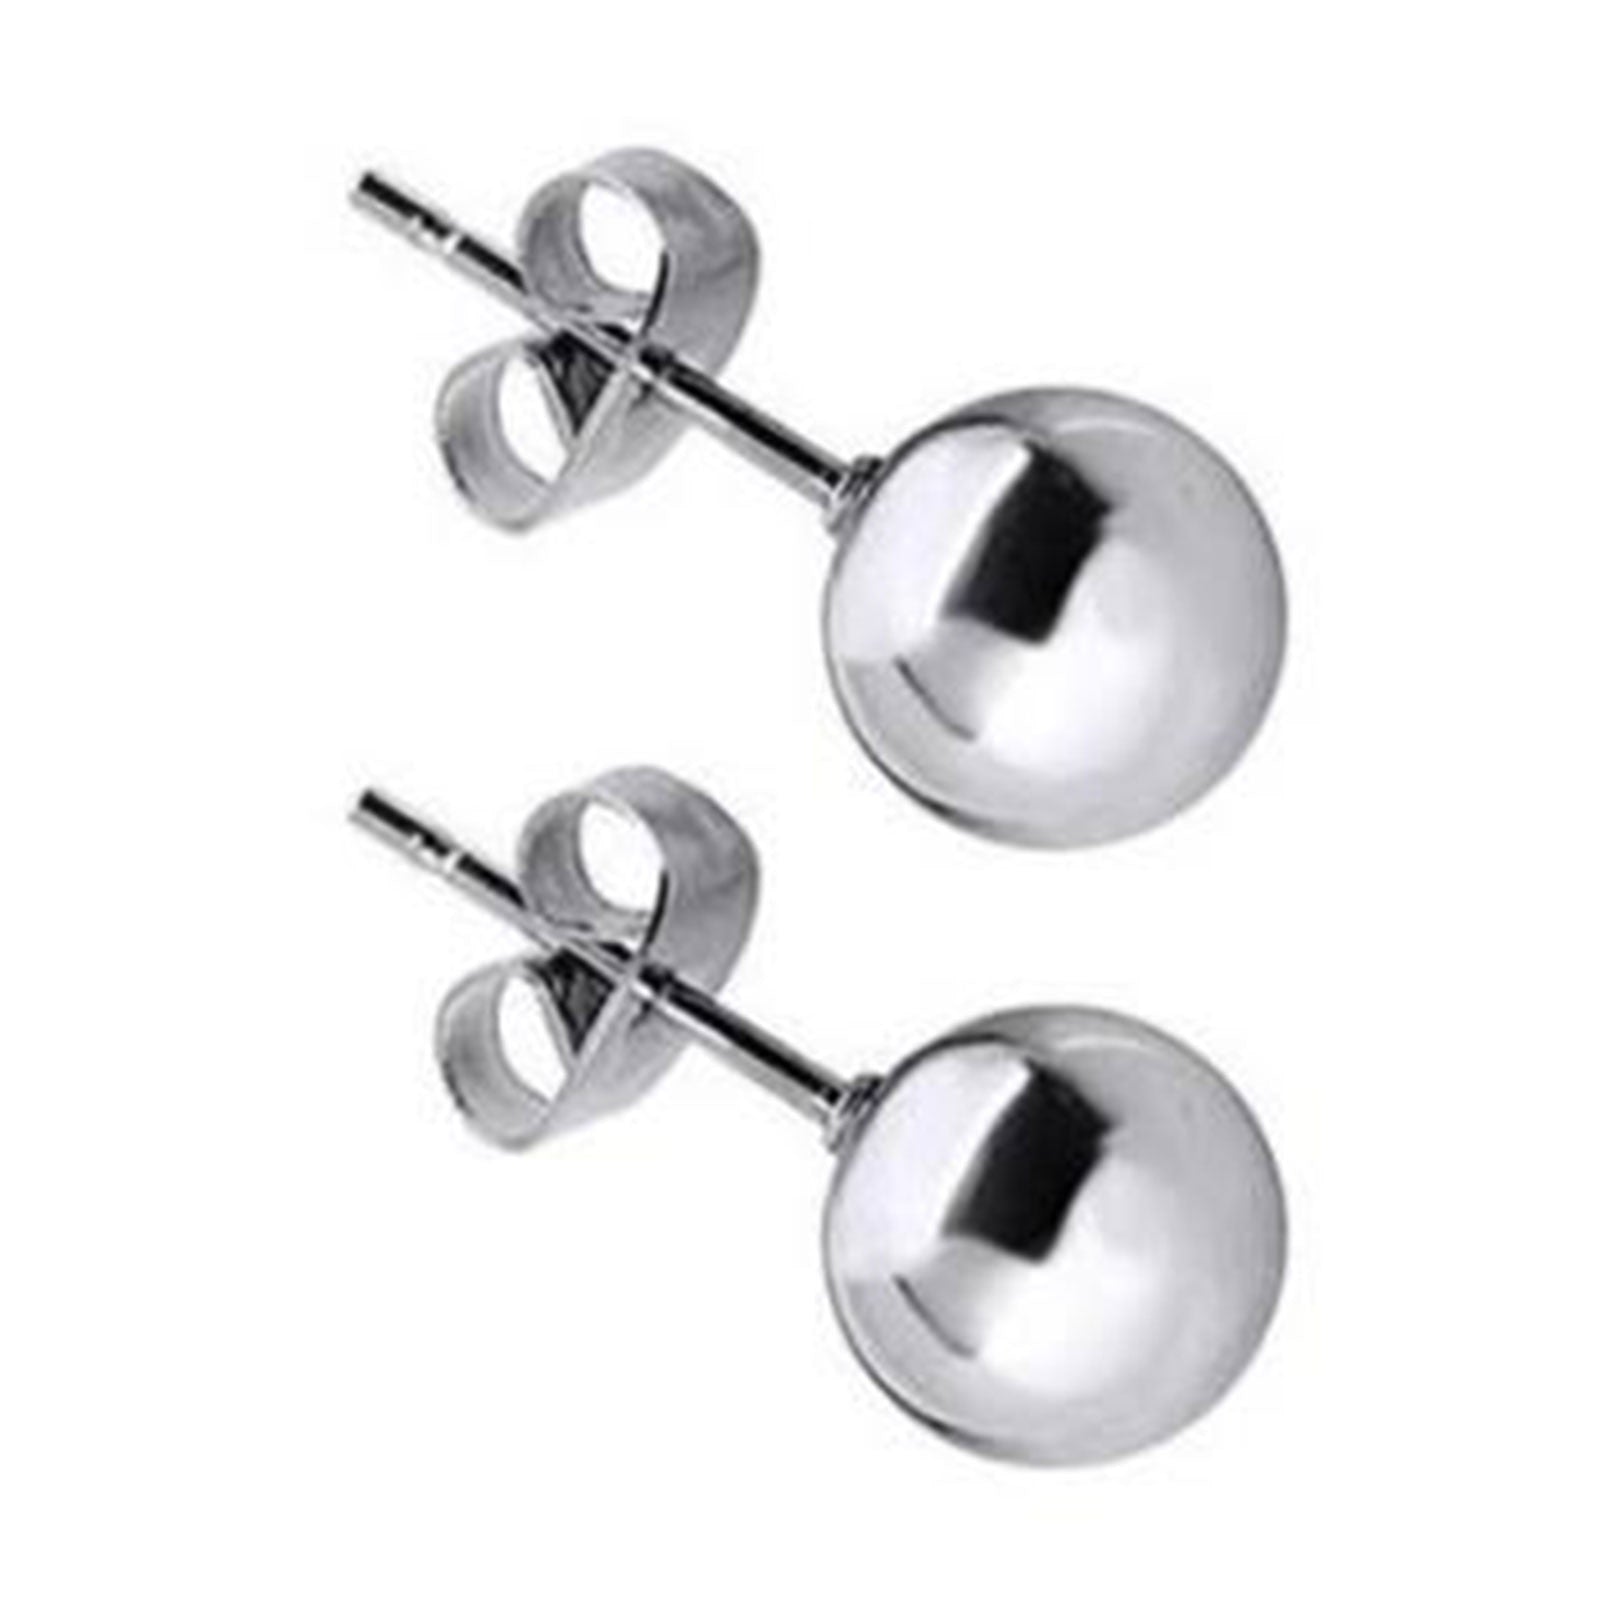 Stainless Steel Ear Post Stud Earrings For Women, 1 Pair